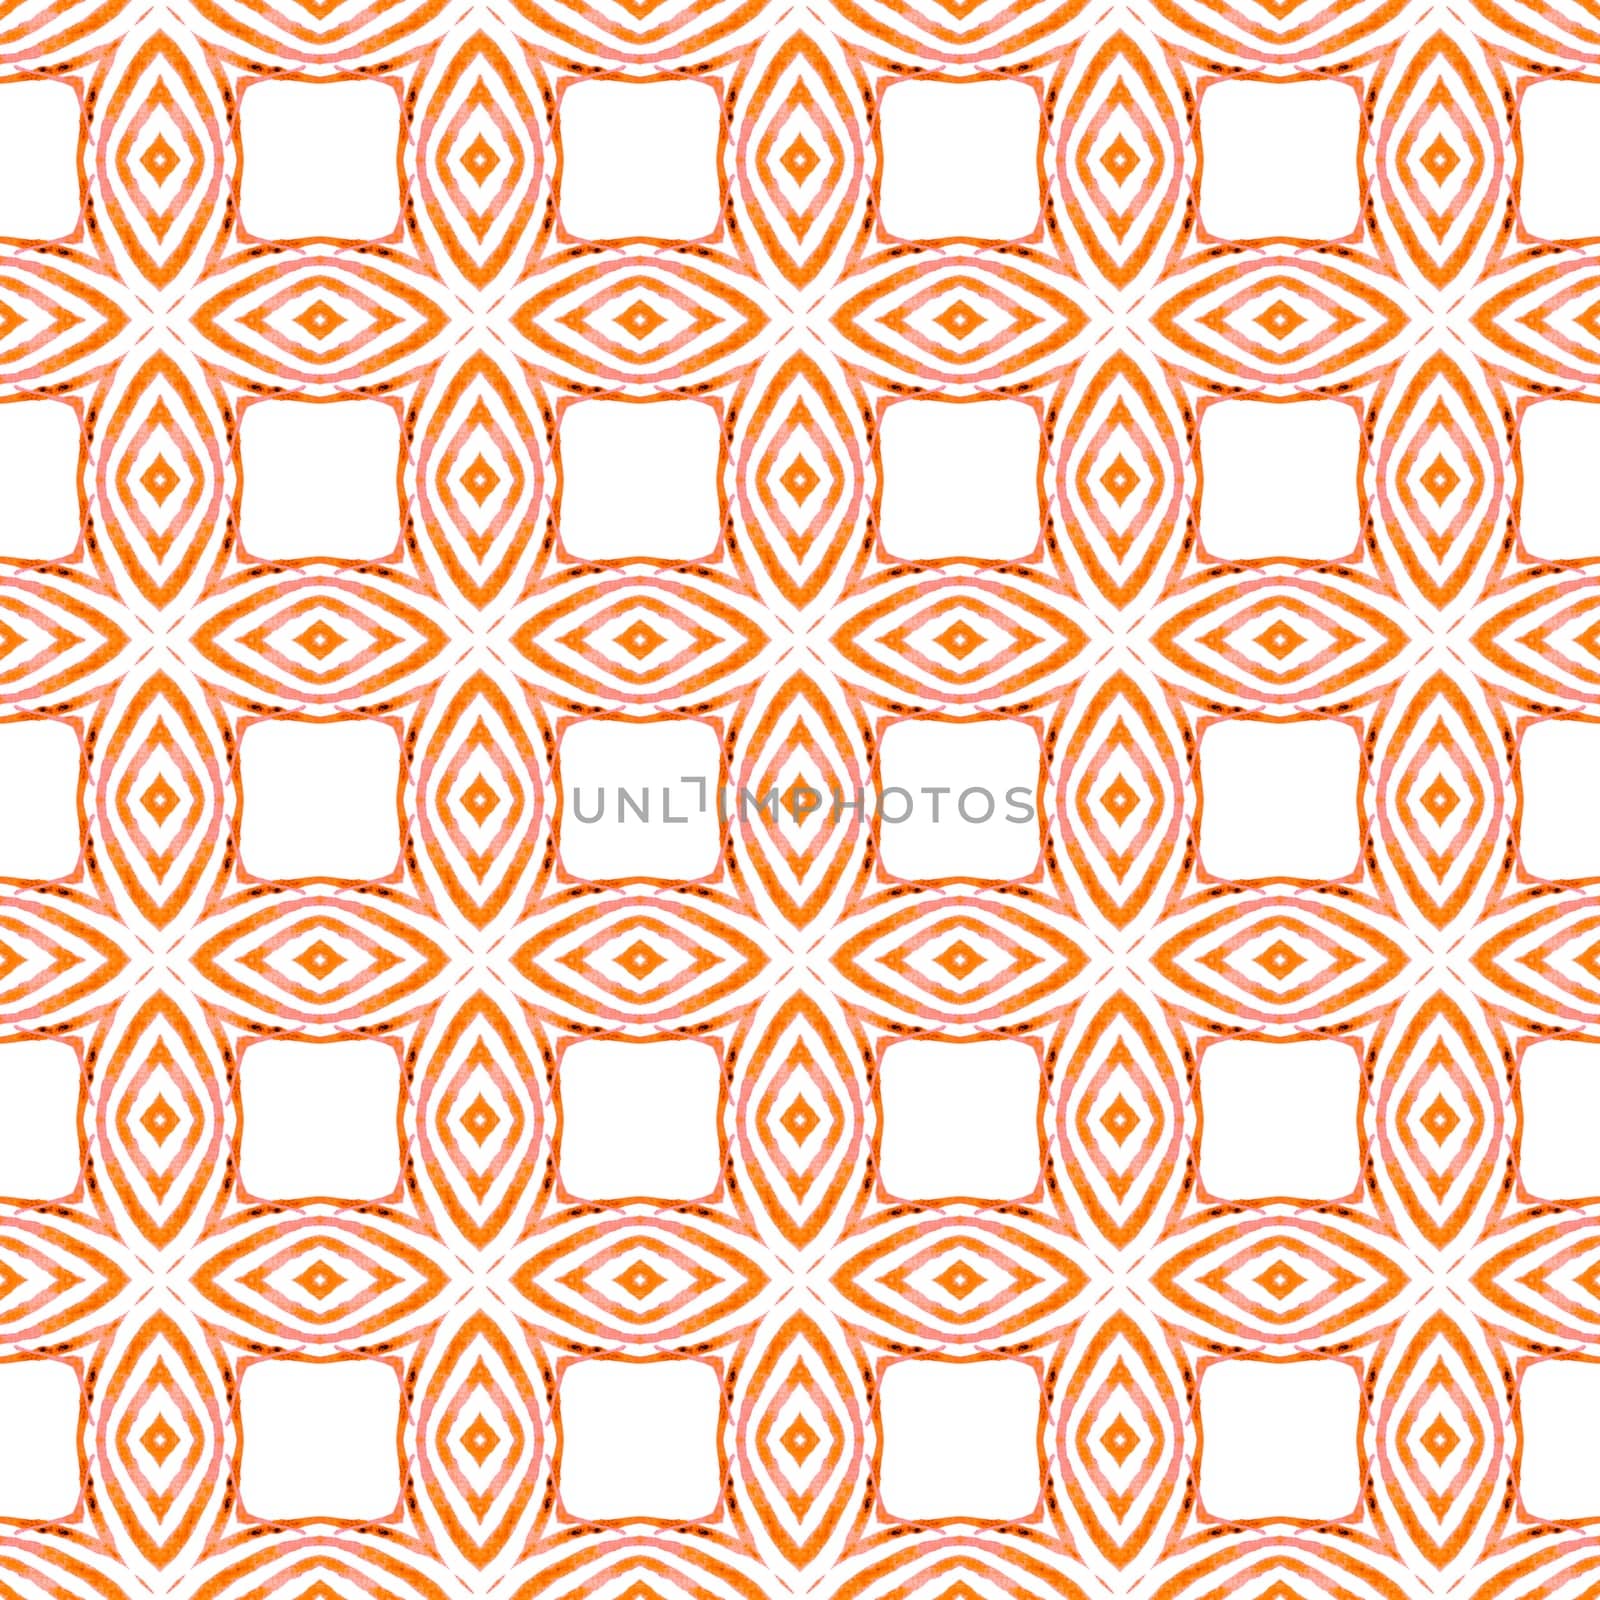 Repeating striped hand drawn border. Orange bold by beginagain